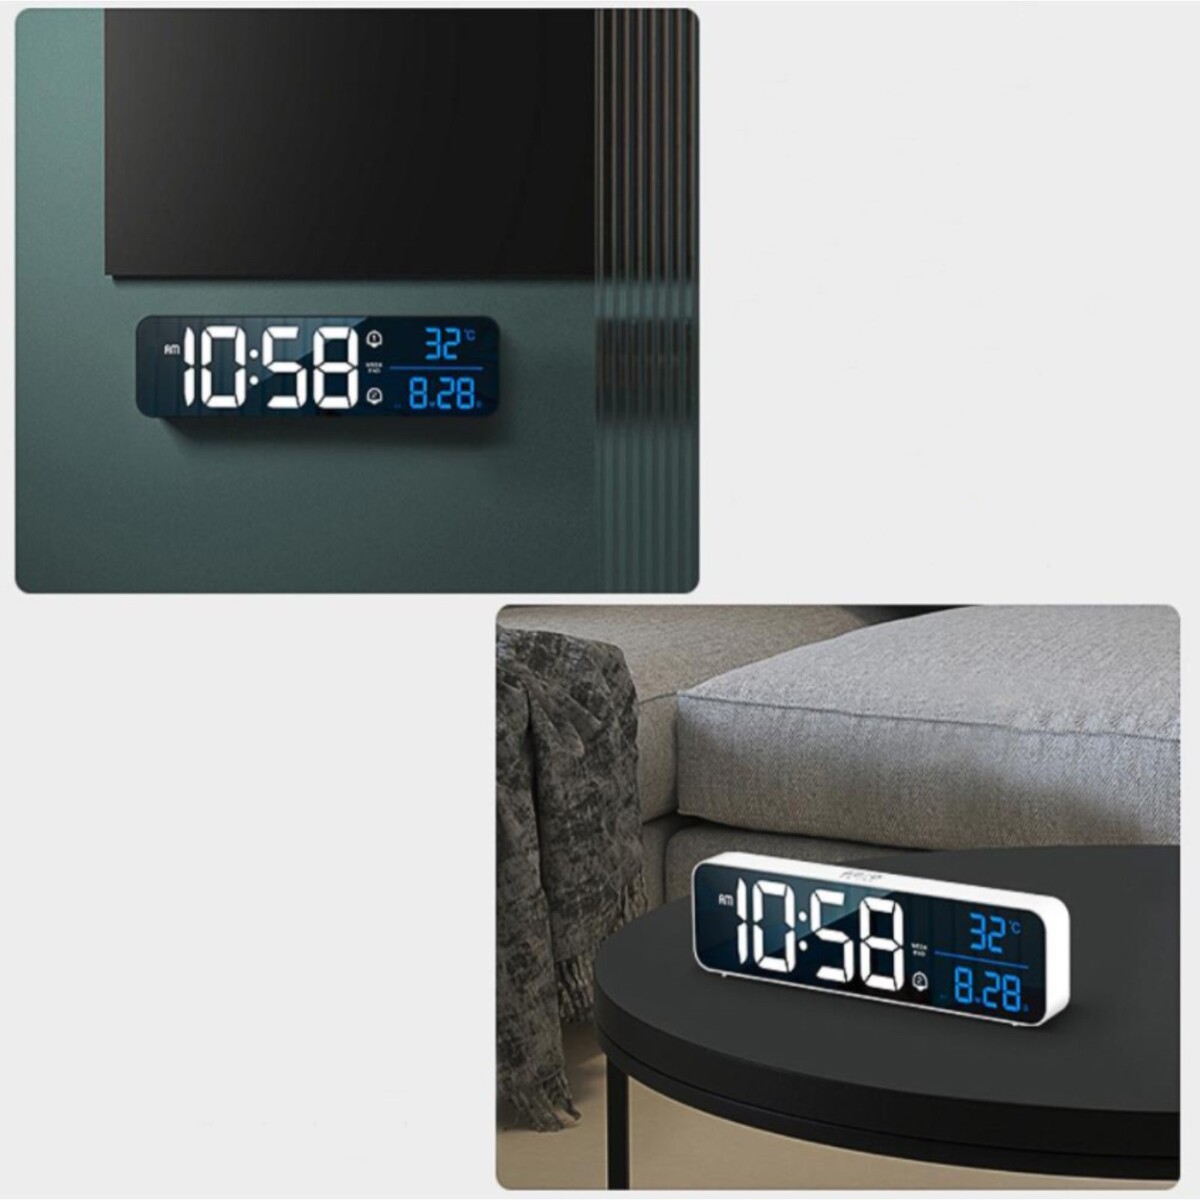 фото Часы электронные настенные, настольные, с будильником, 2400 мач, 3.5 х 7 х 26.5 см no brand